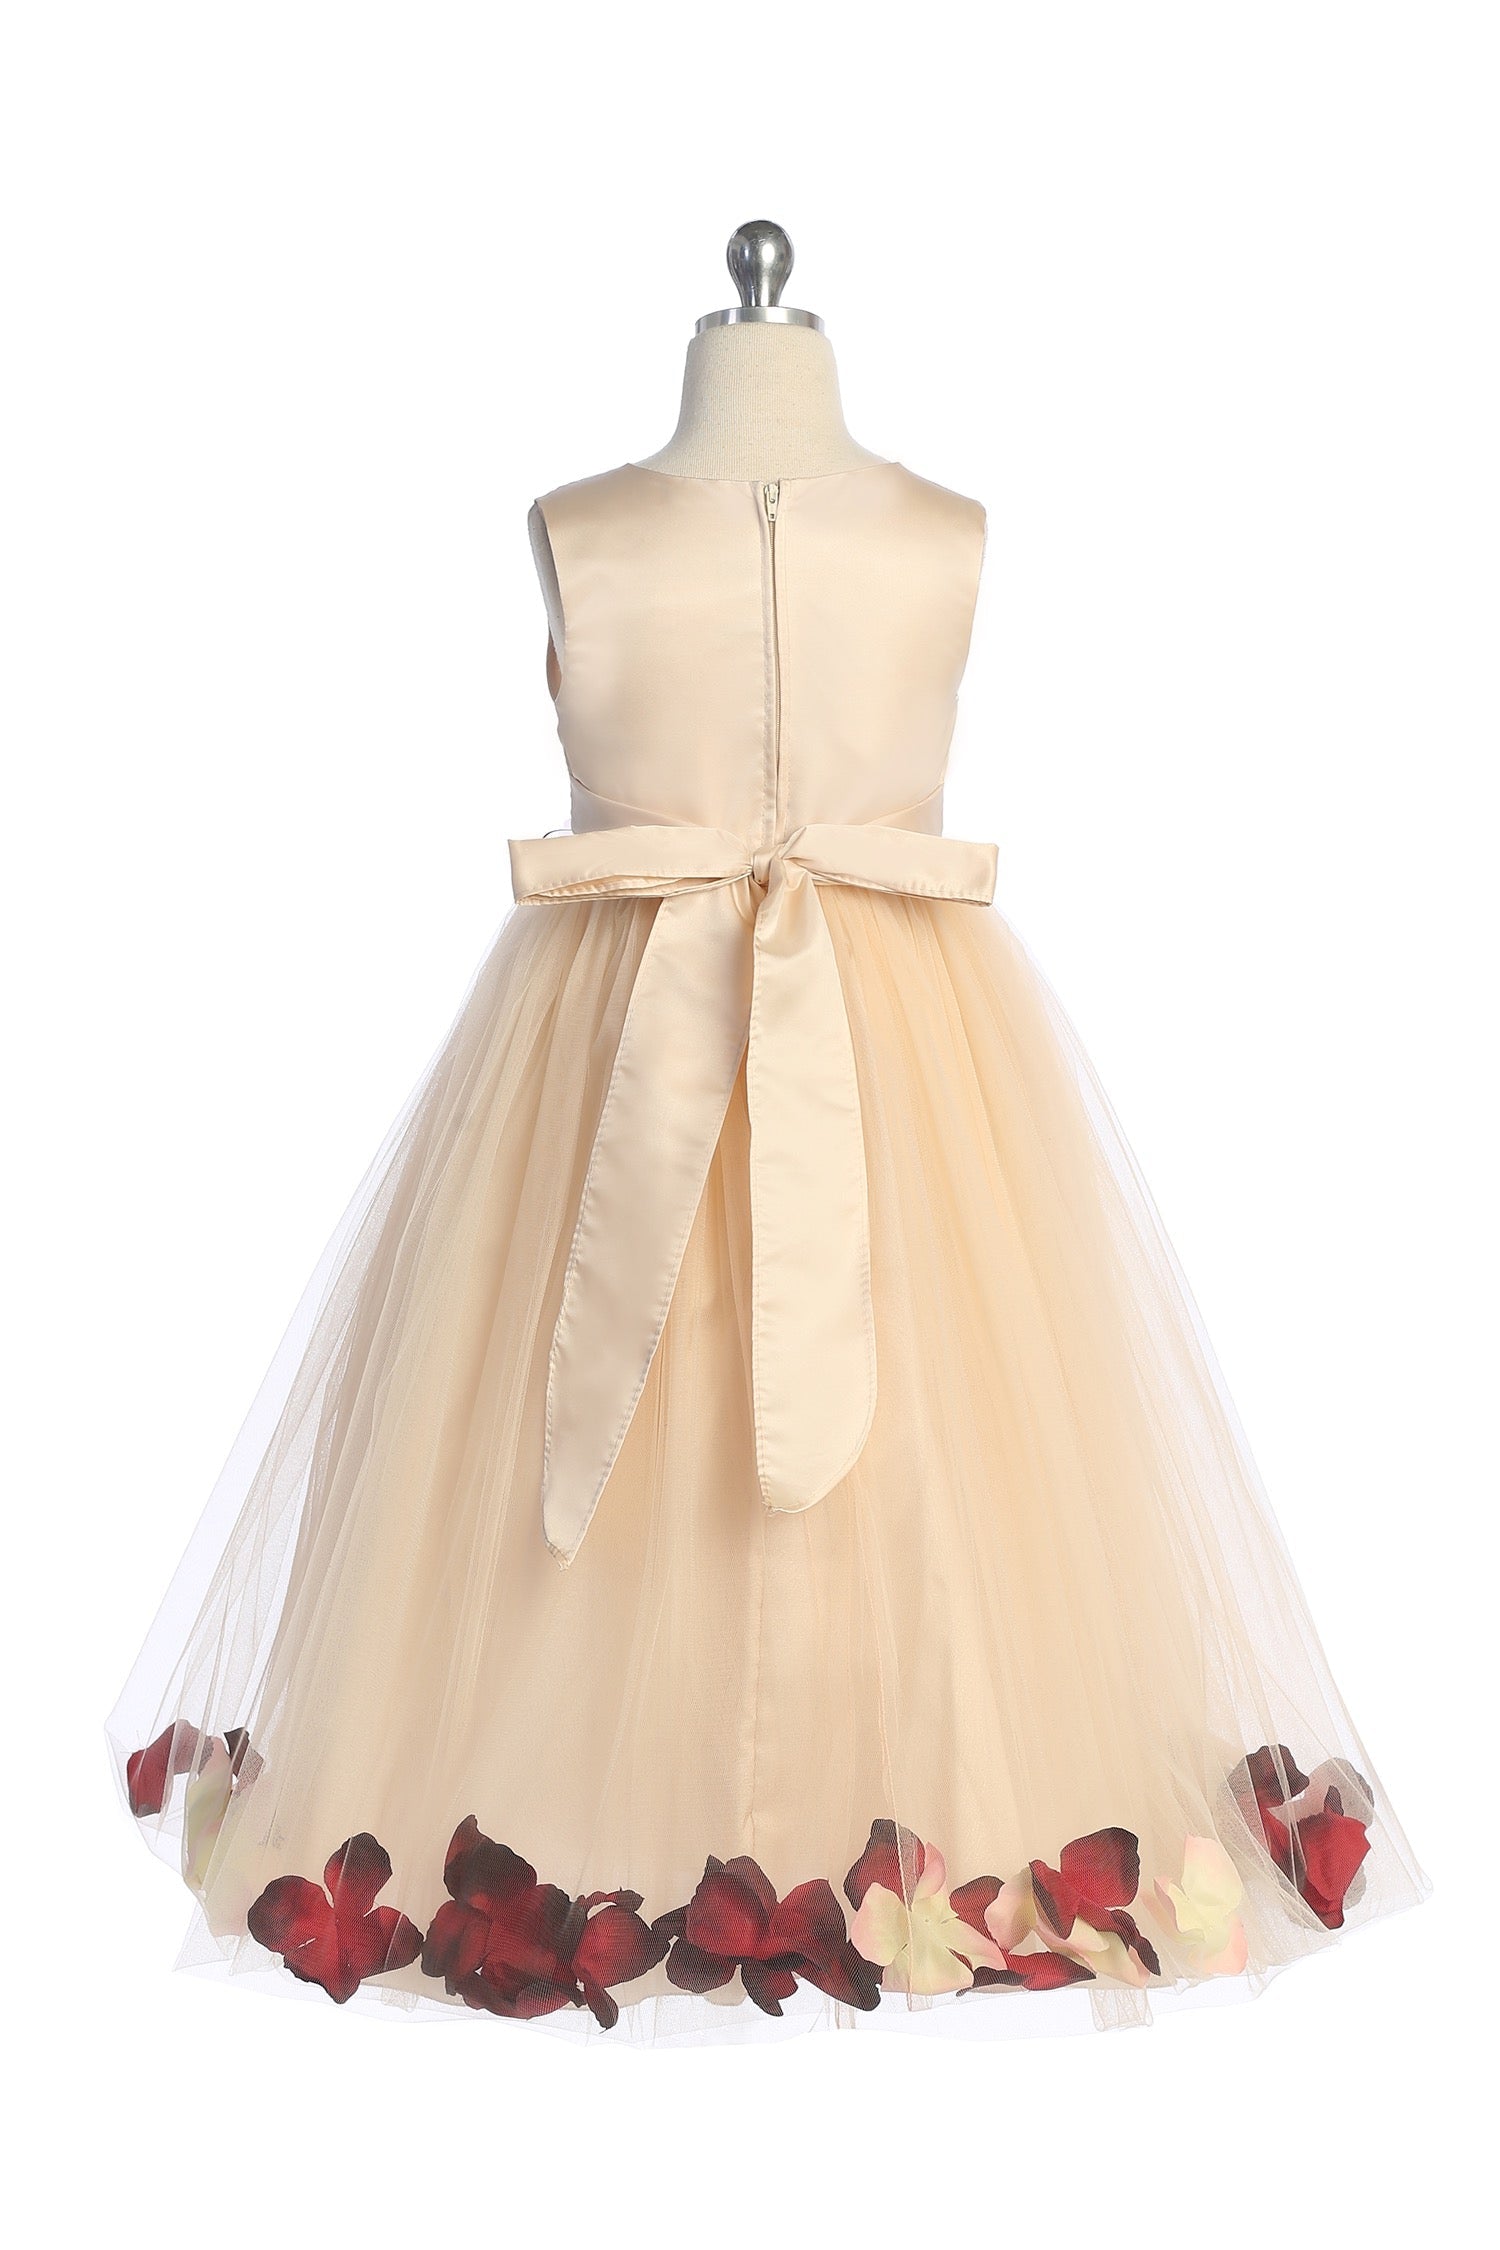 Dress - Blush Satin Flower Petal Girl Dress